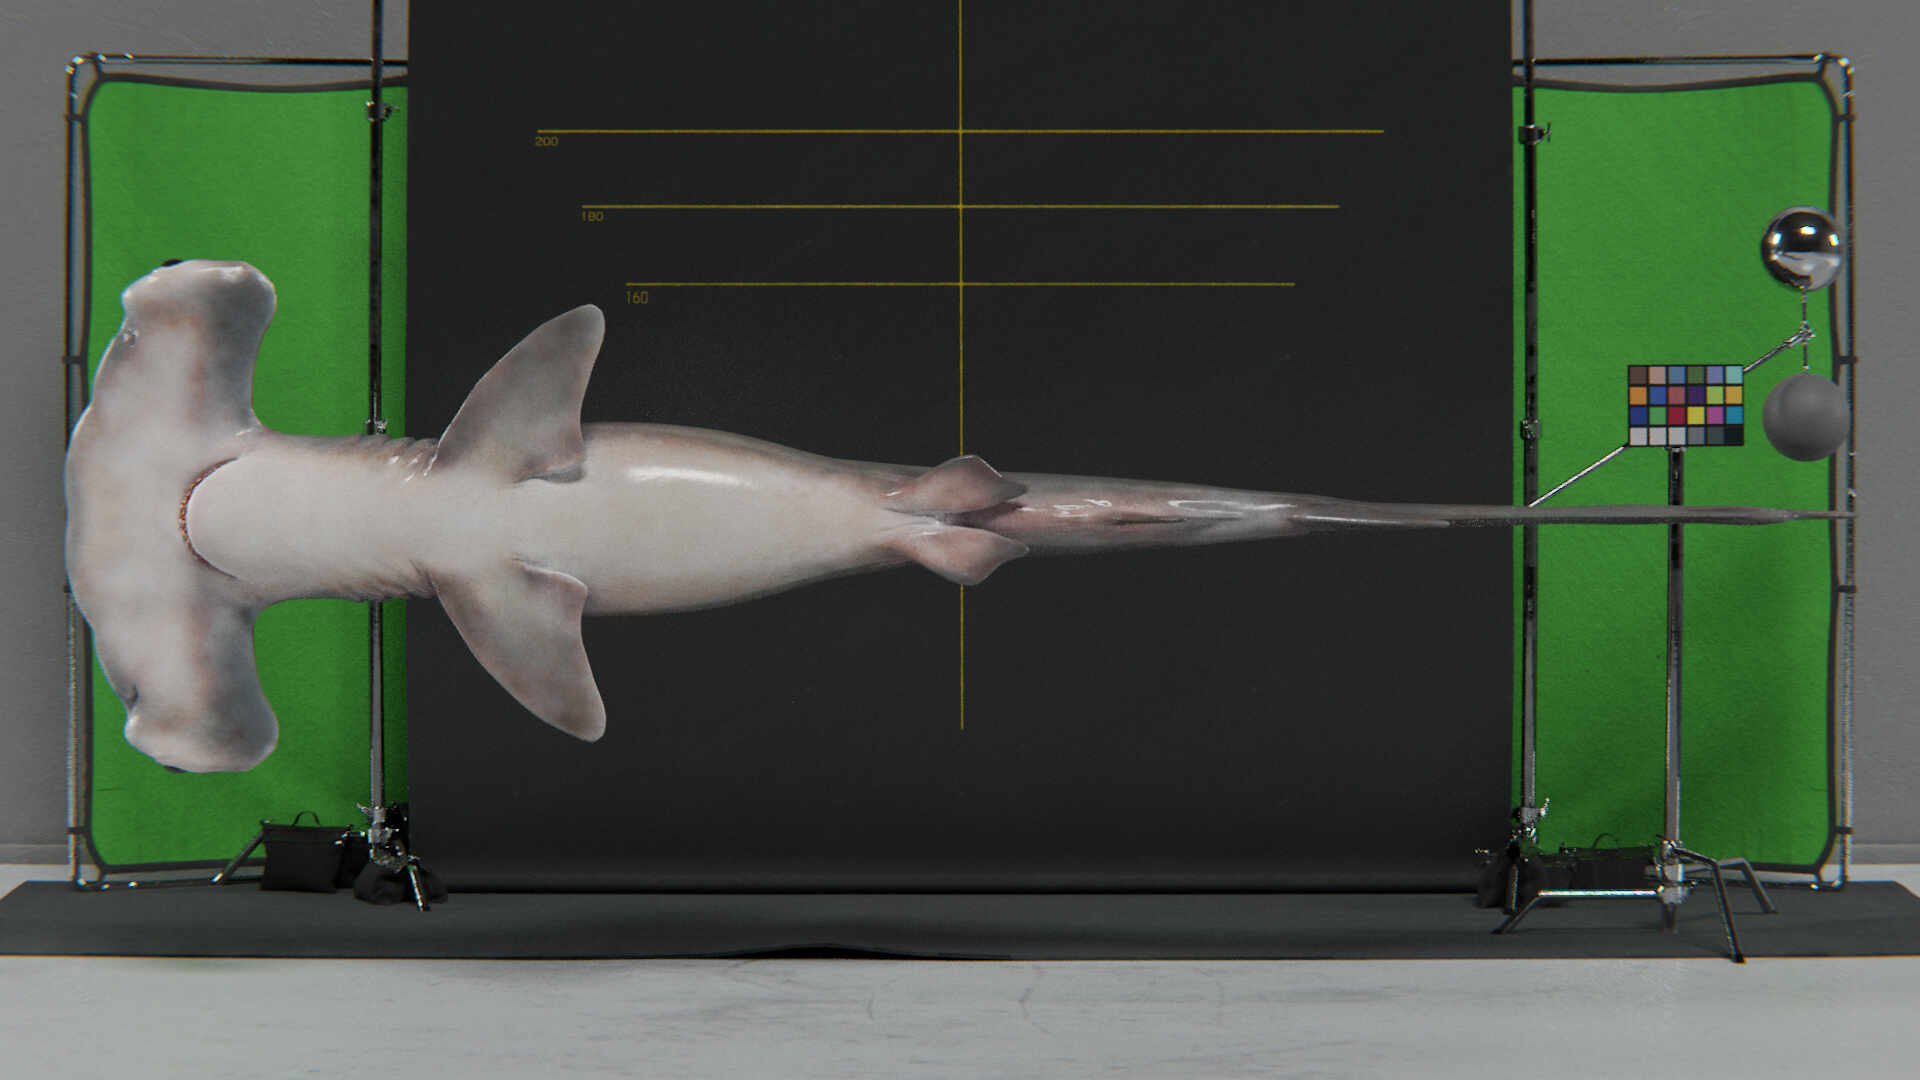 hammerhead shark - ZBrushCentral